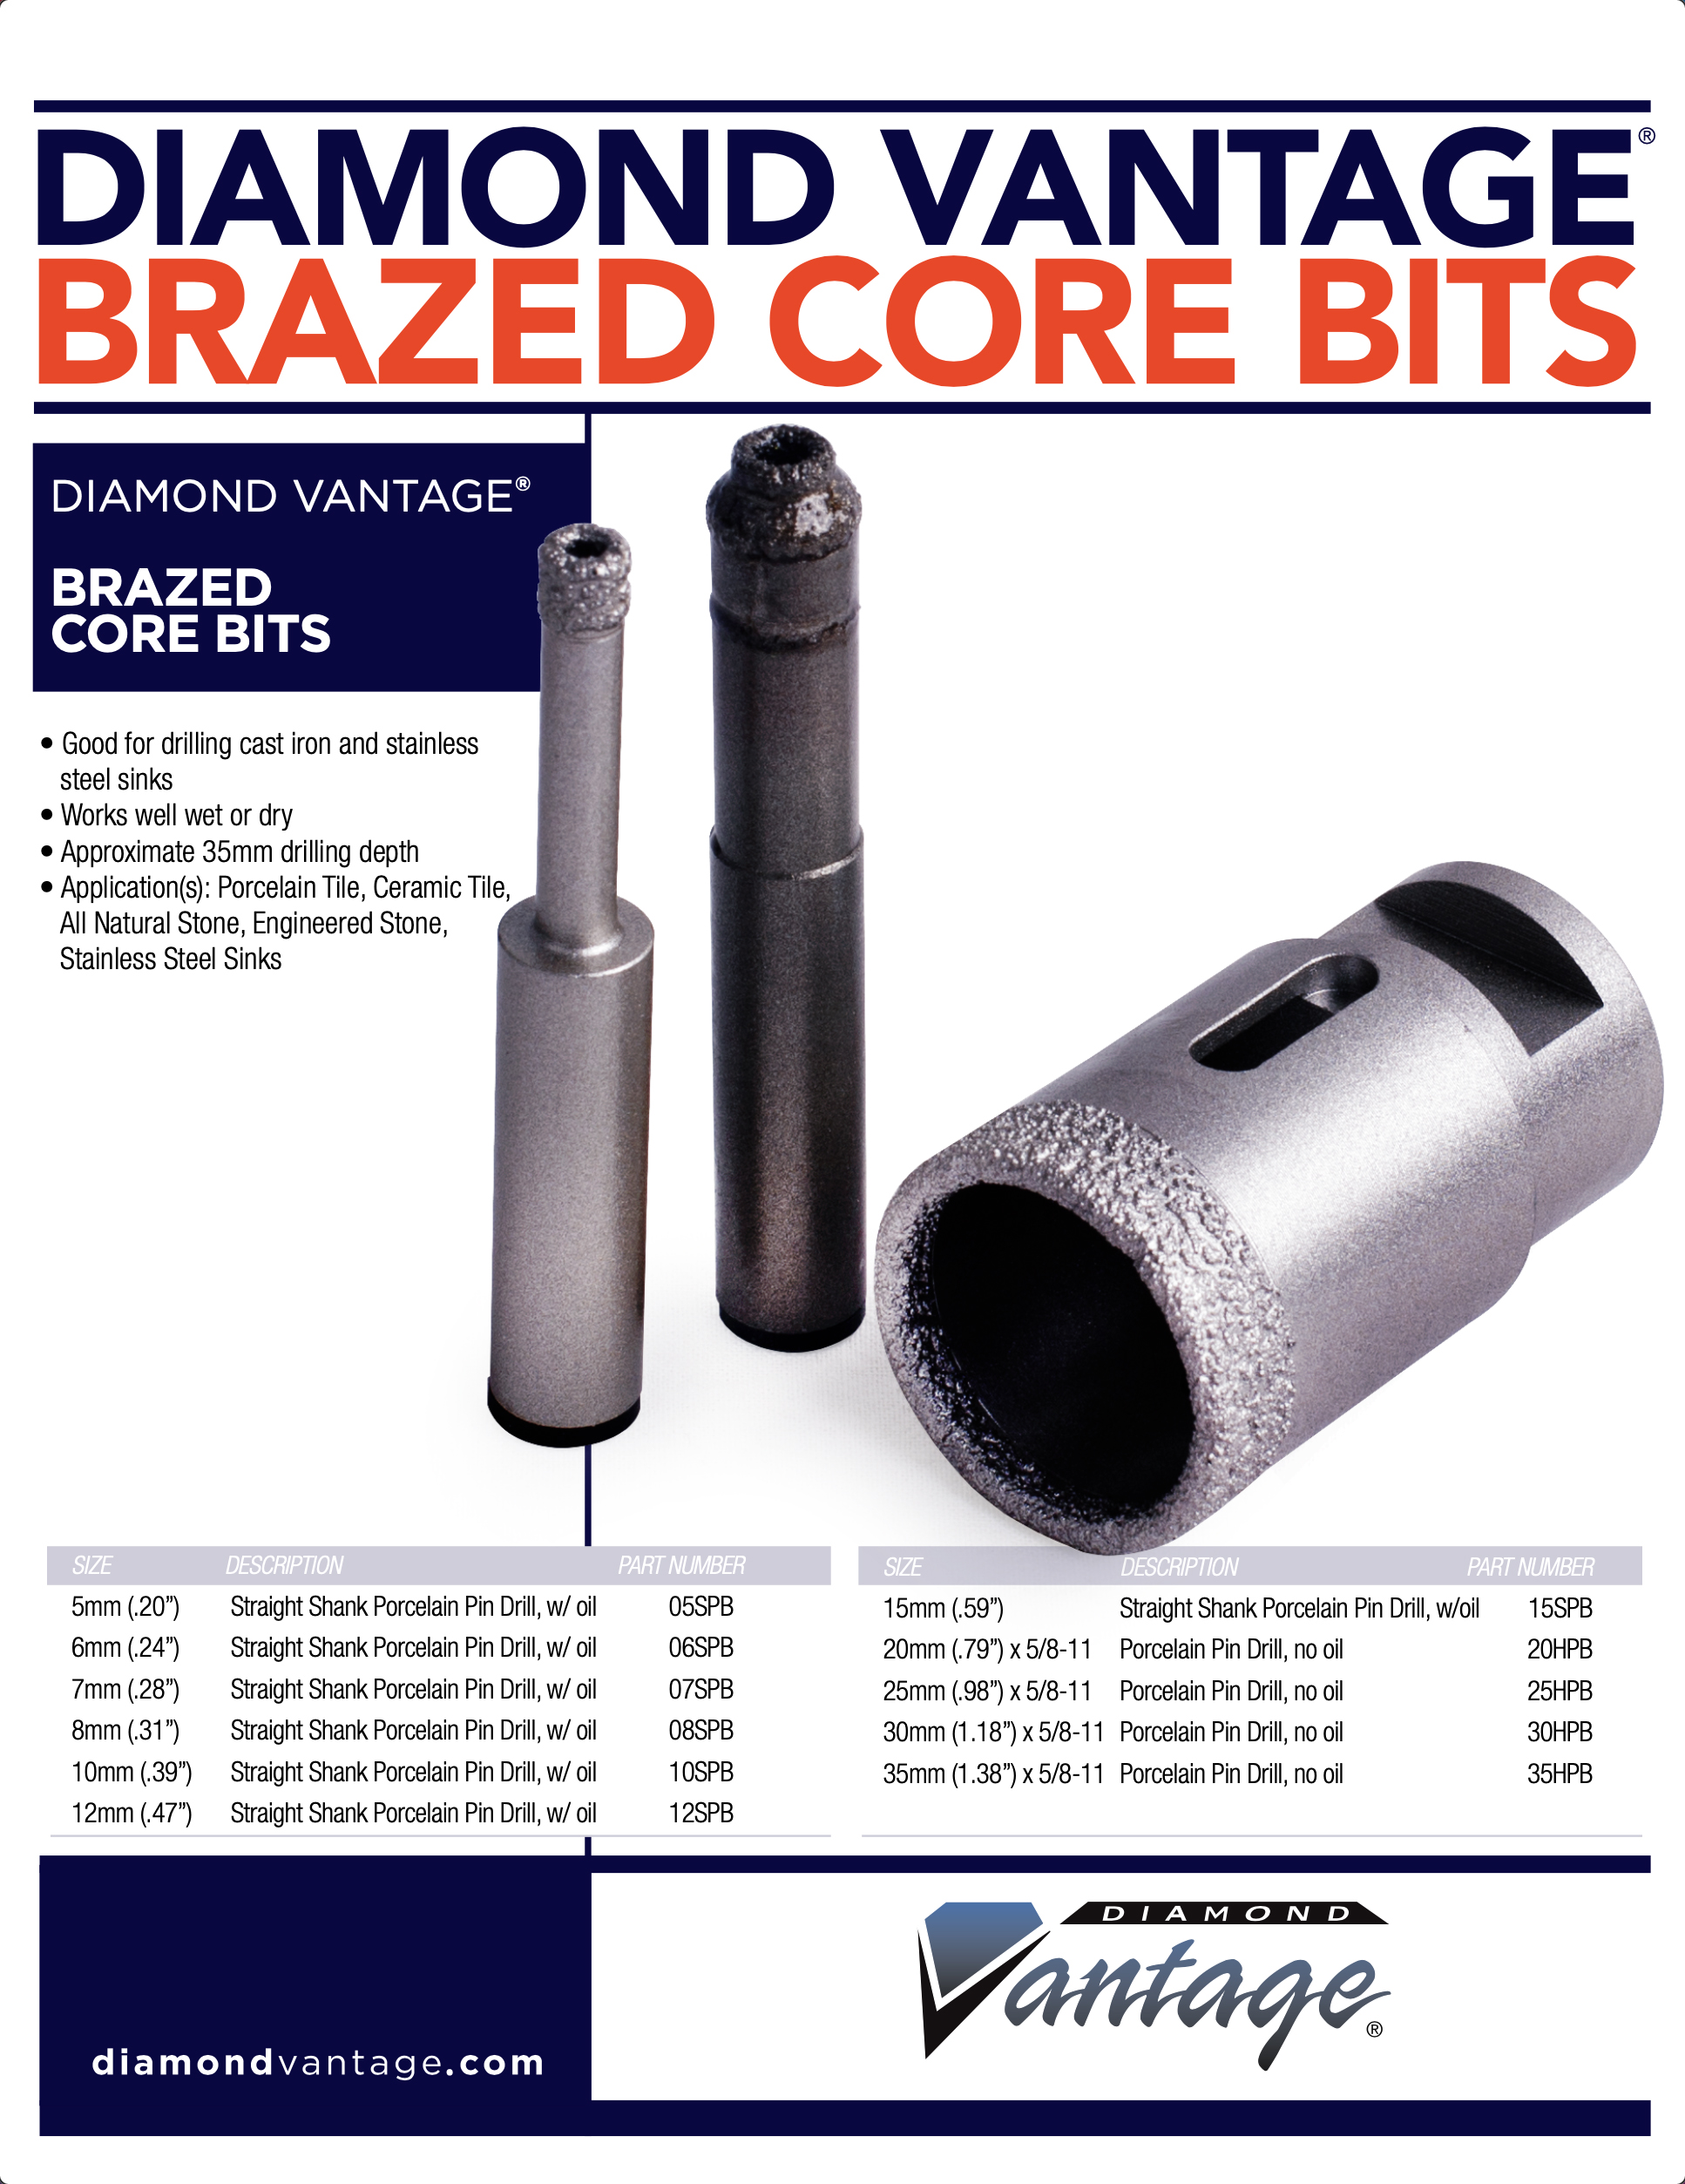 Brazed Core Bits